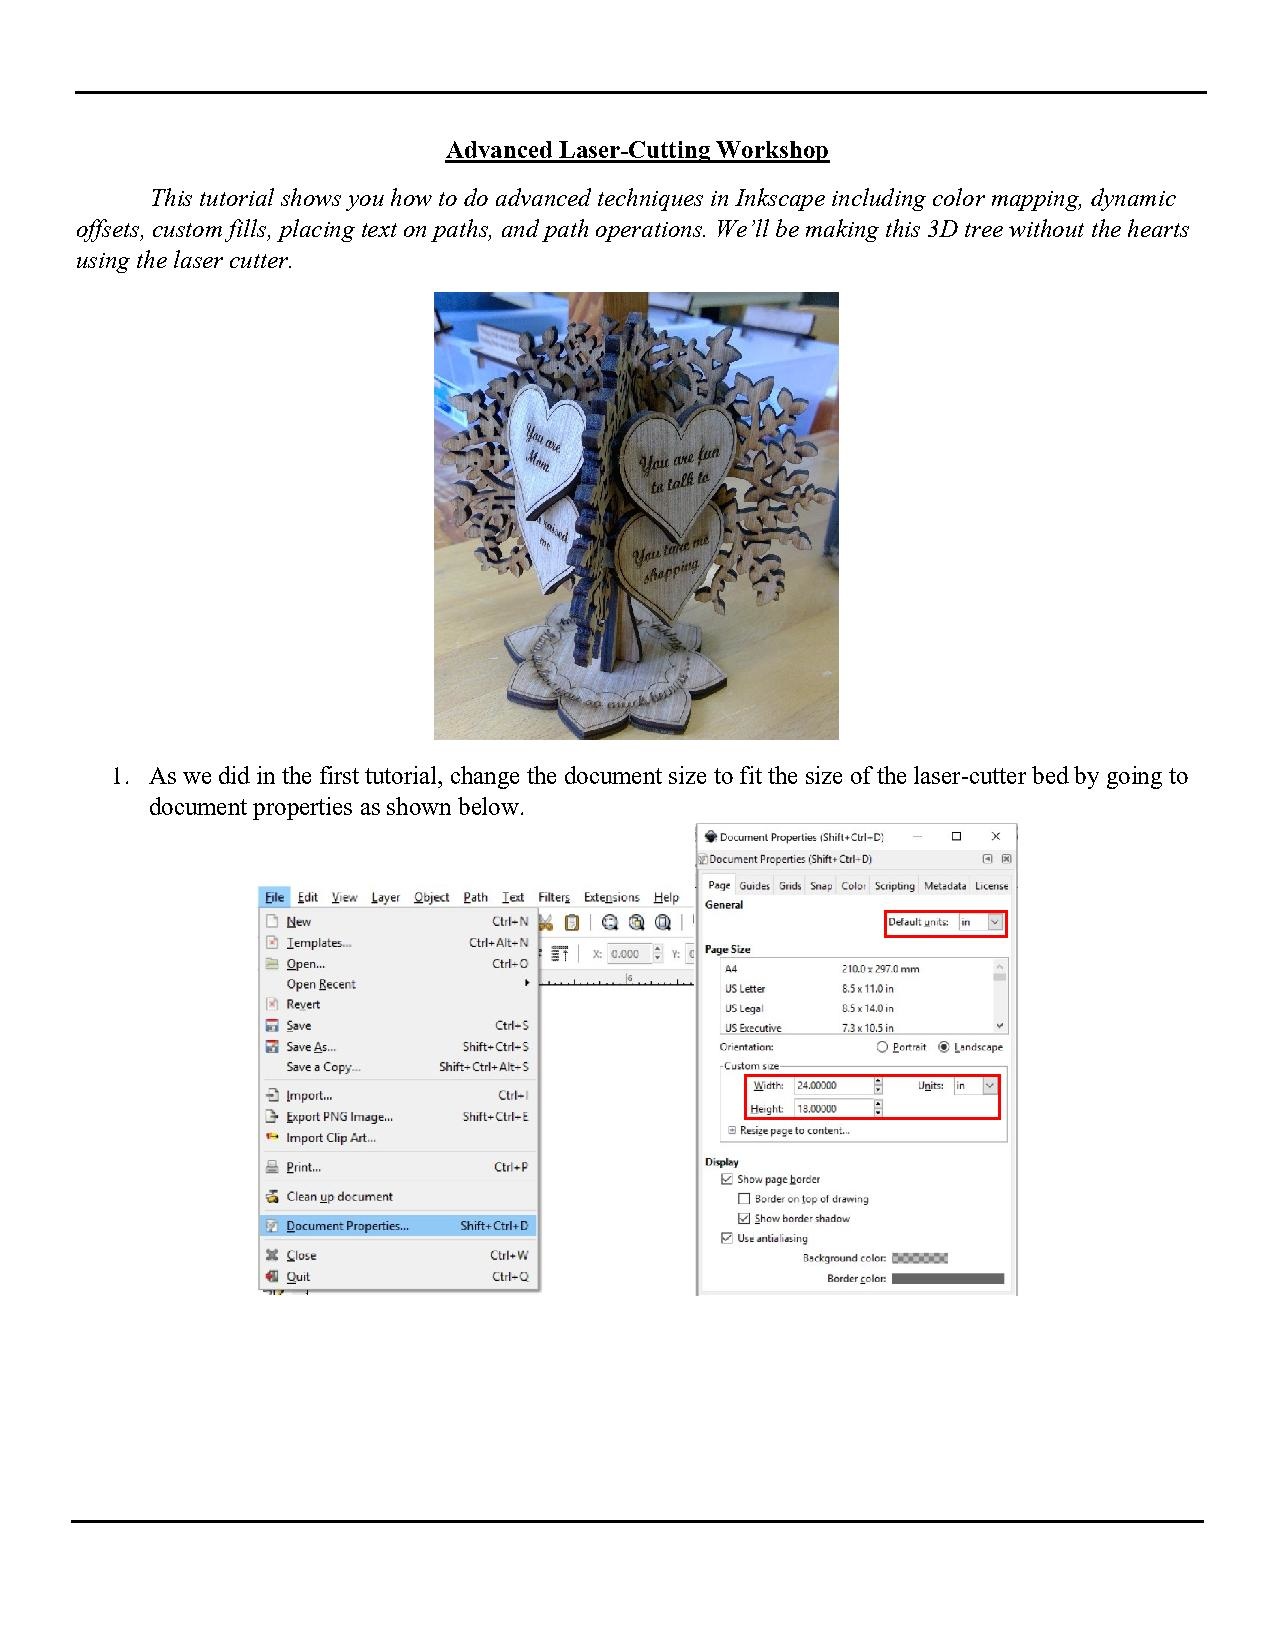 AdvancedLaserCutting Tree V2.pdf